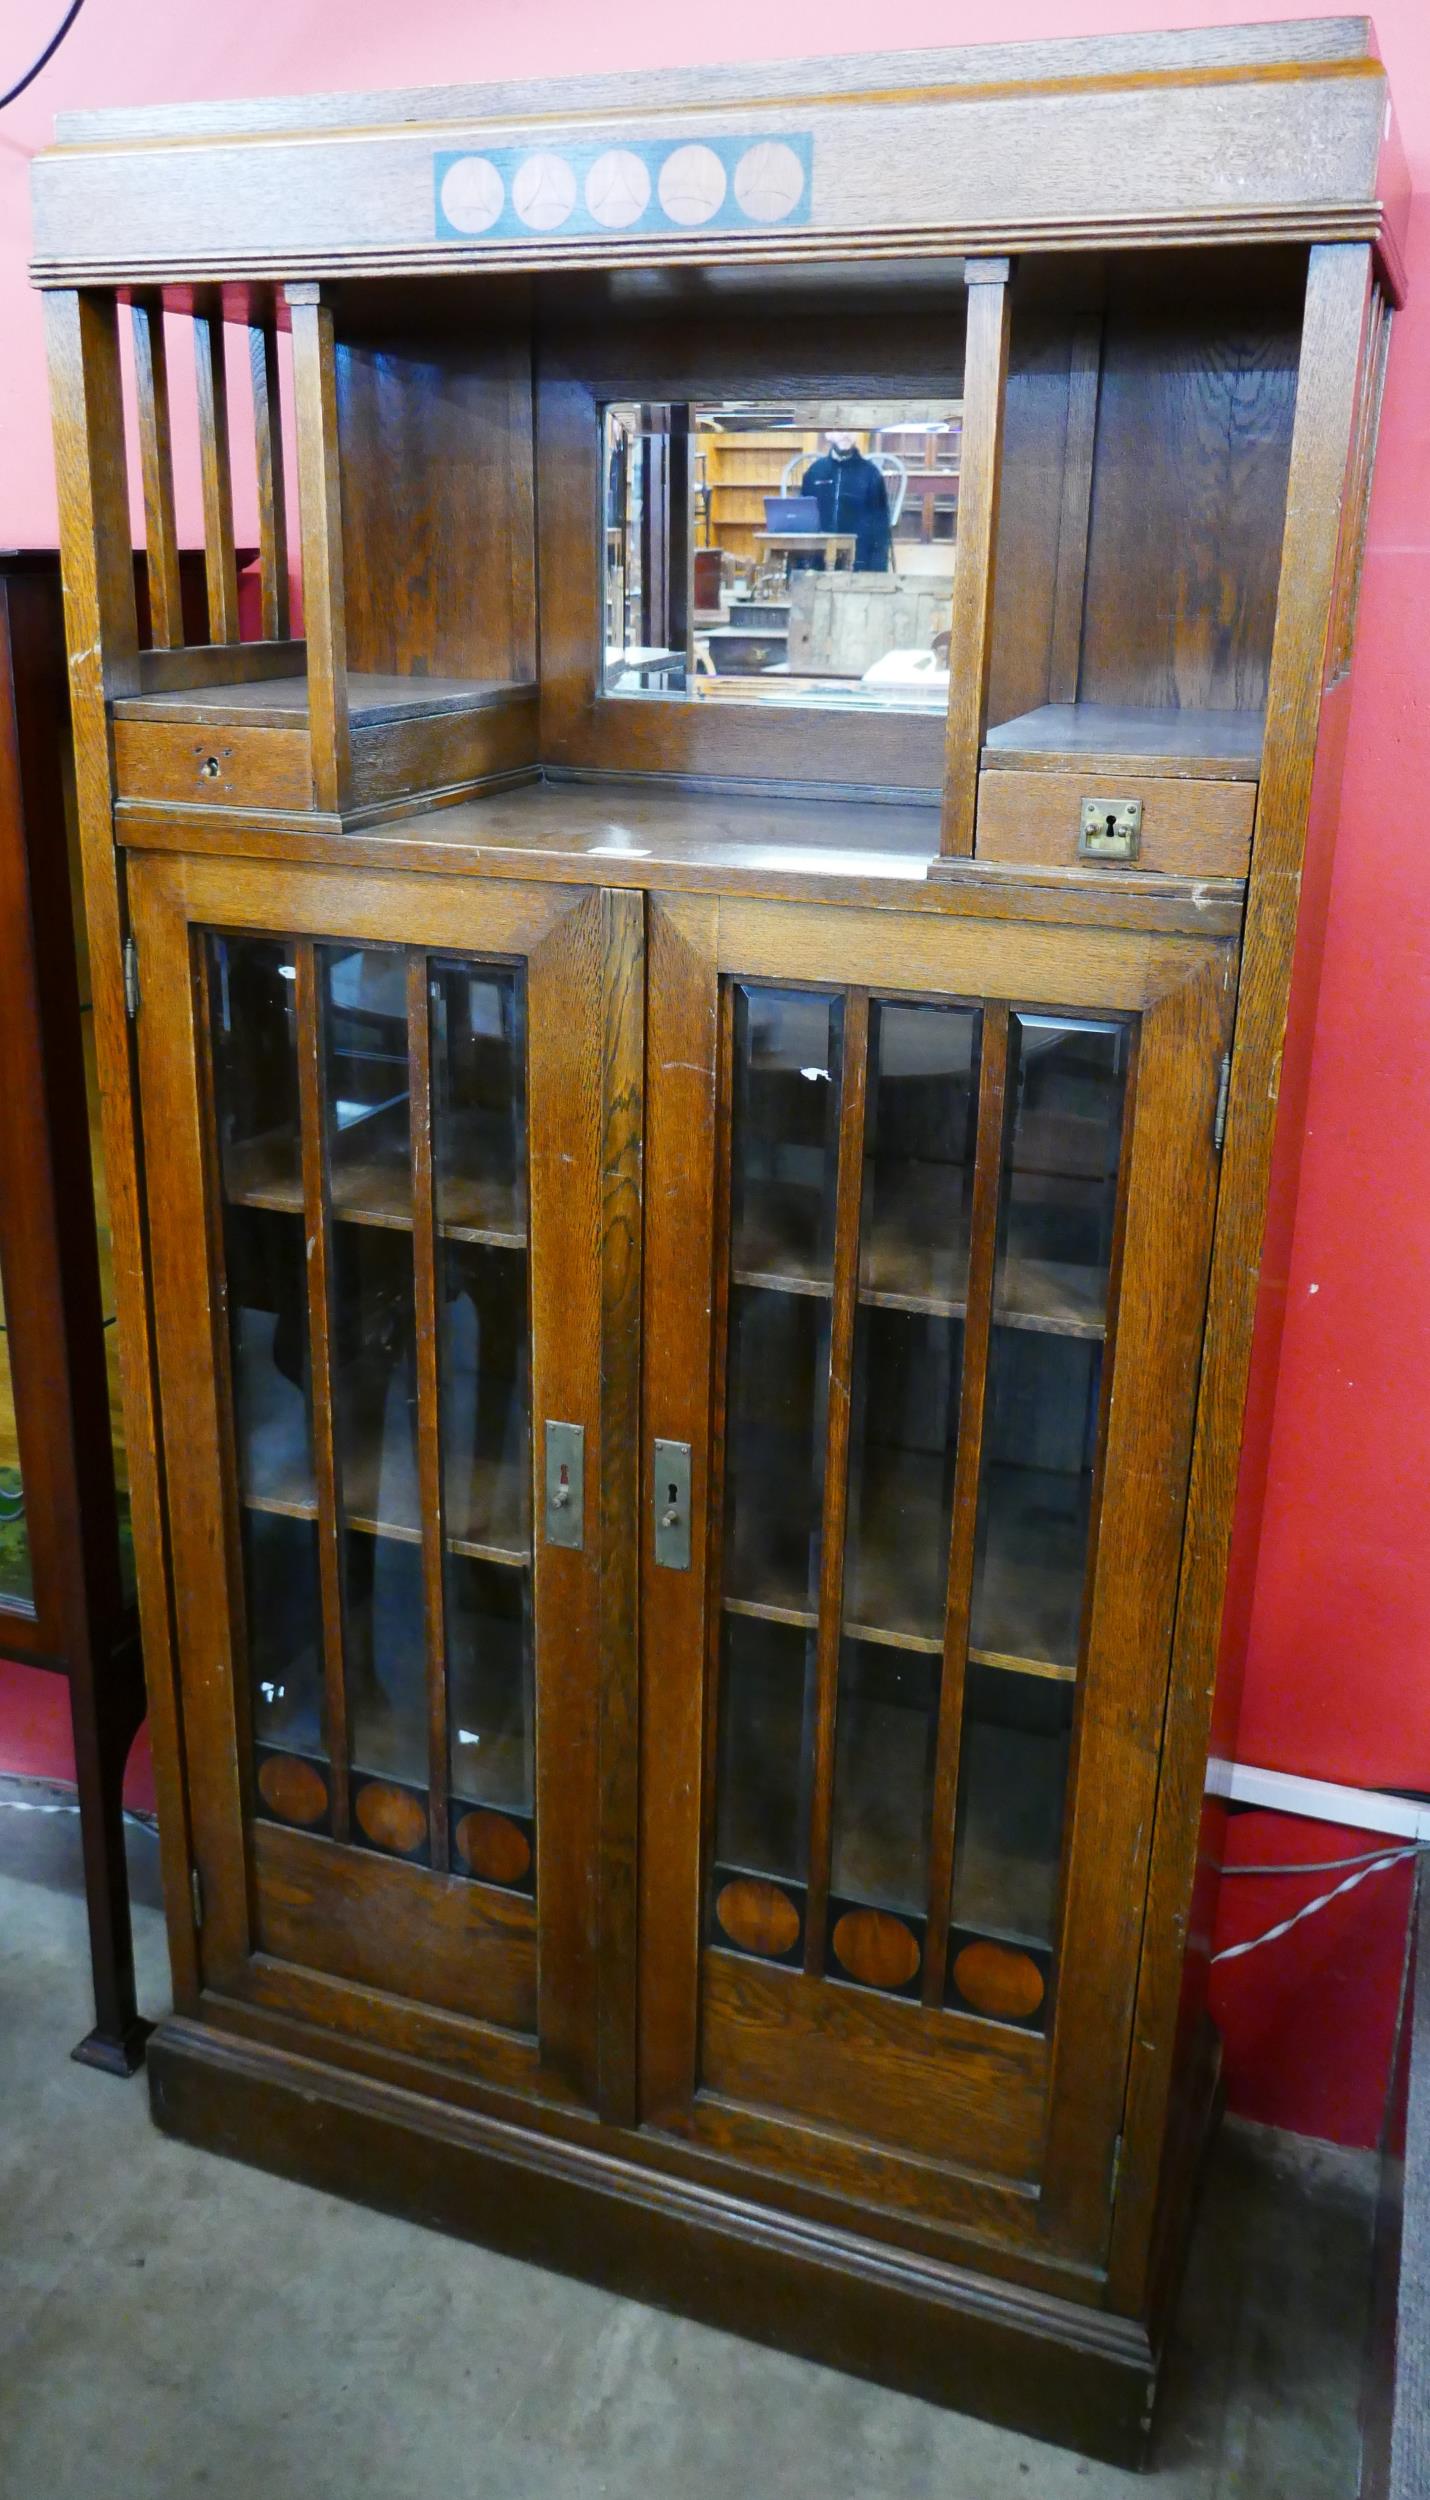 A Secessionist inlaid oak bookcase